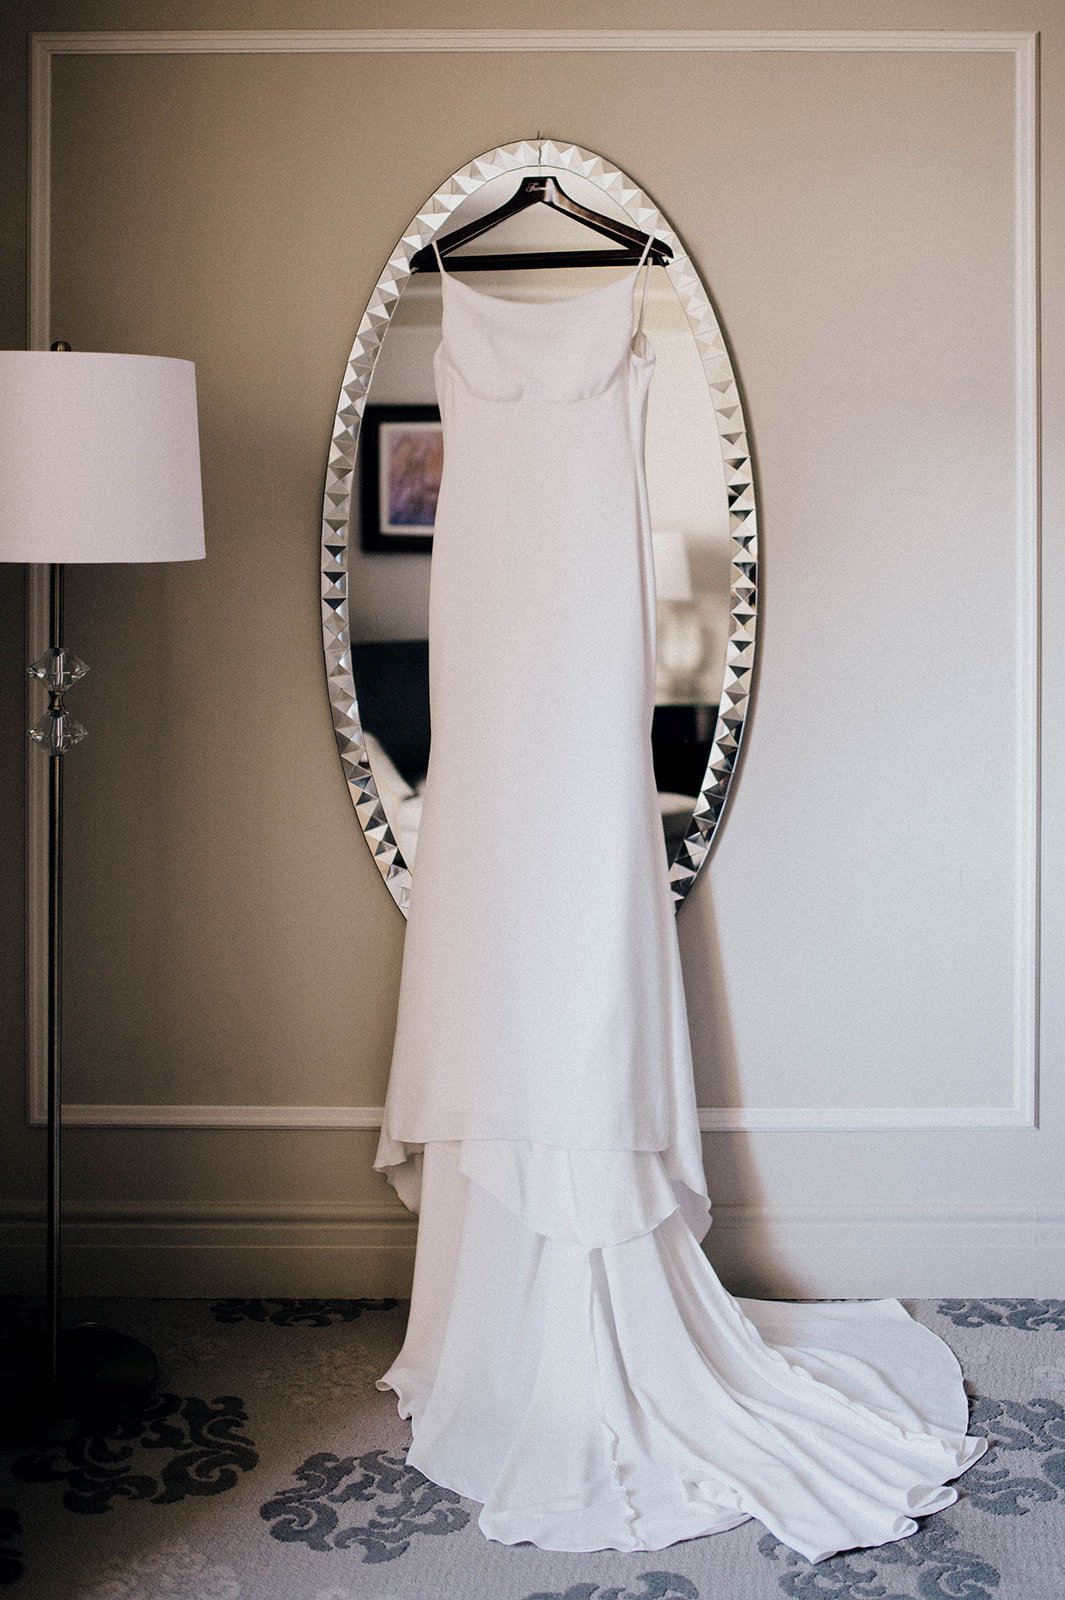 An elegant white wedding dress hangs from a round mirror.